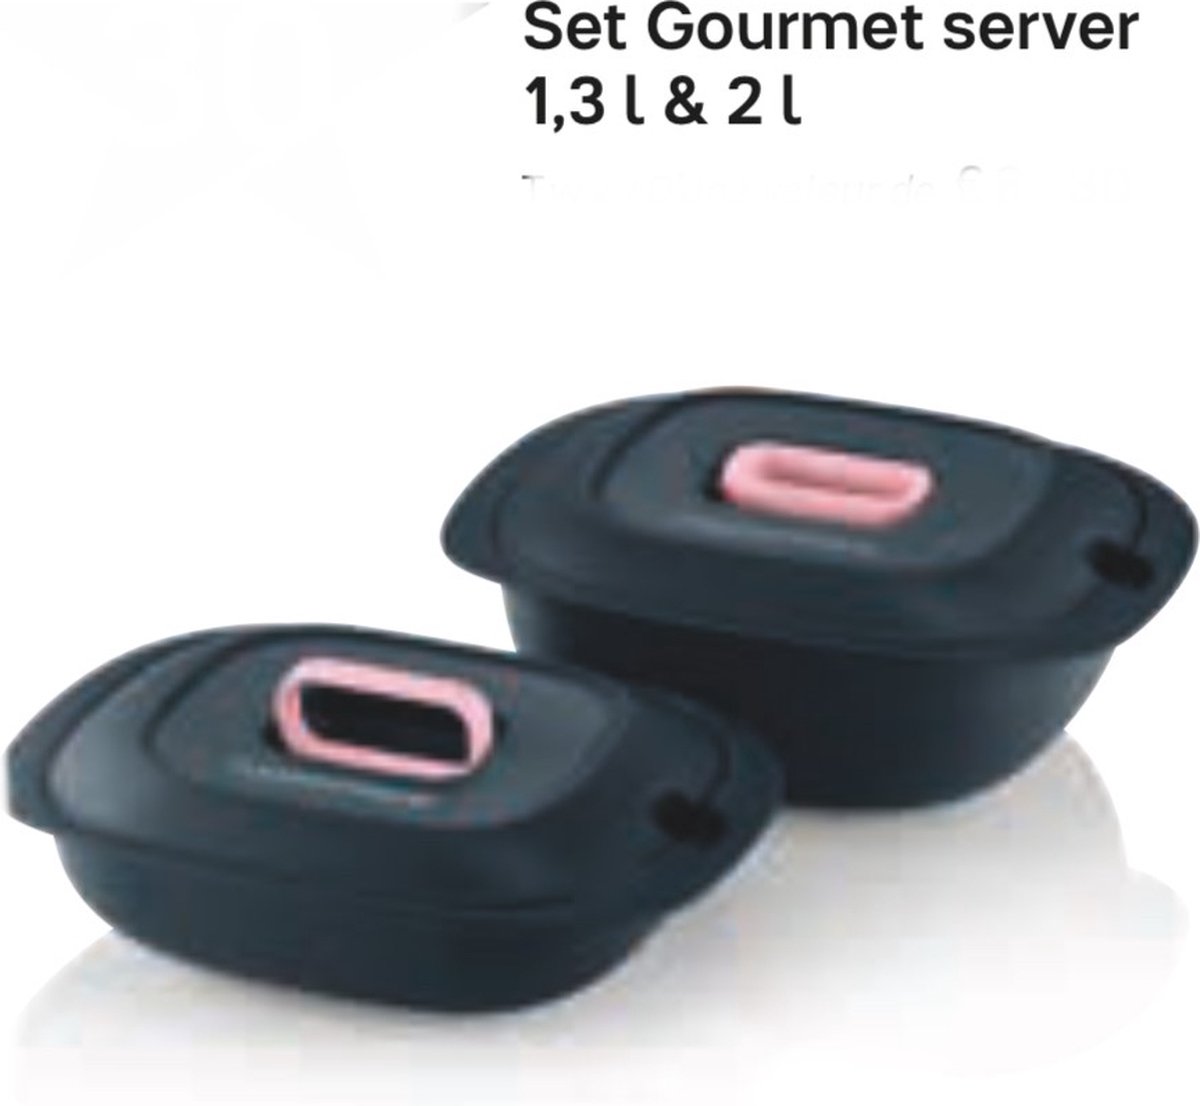 Tupperware Gourmet Servers set